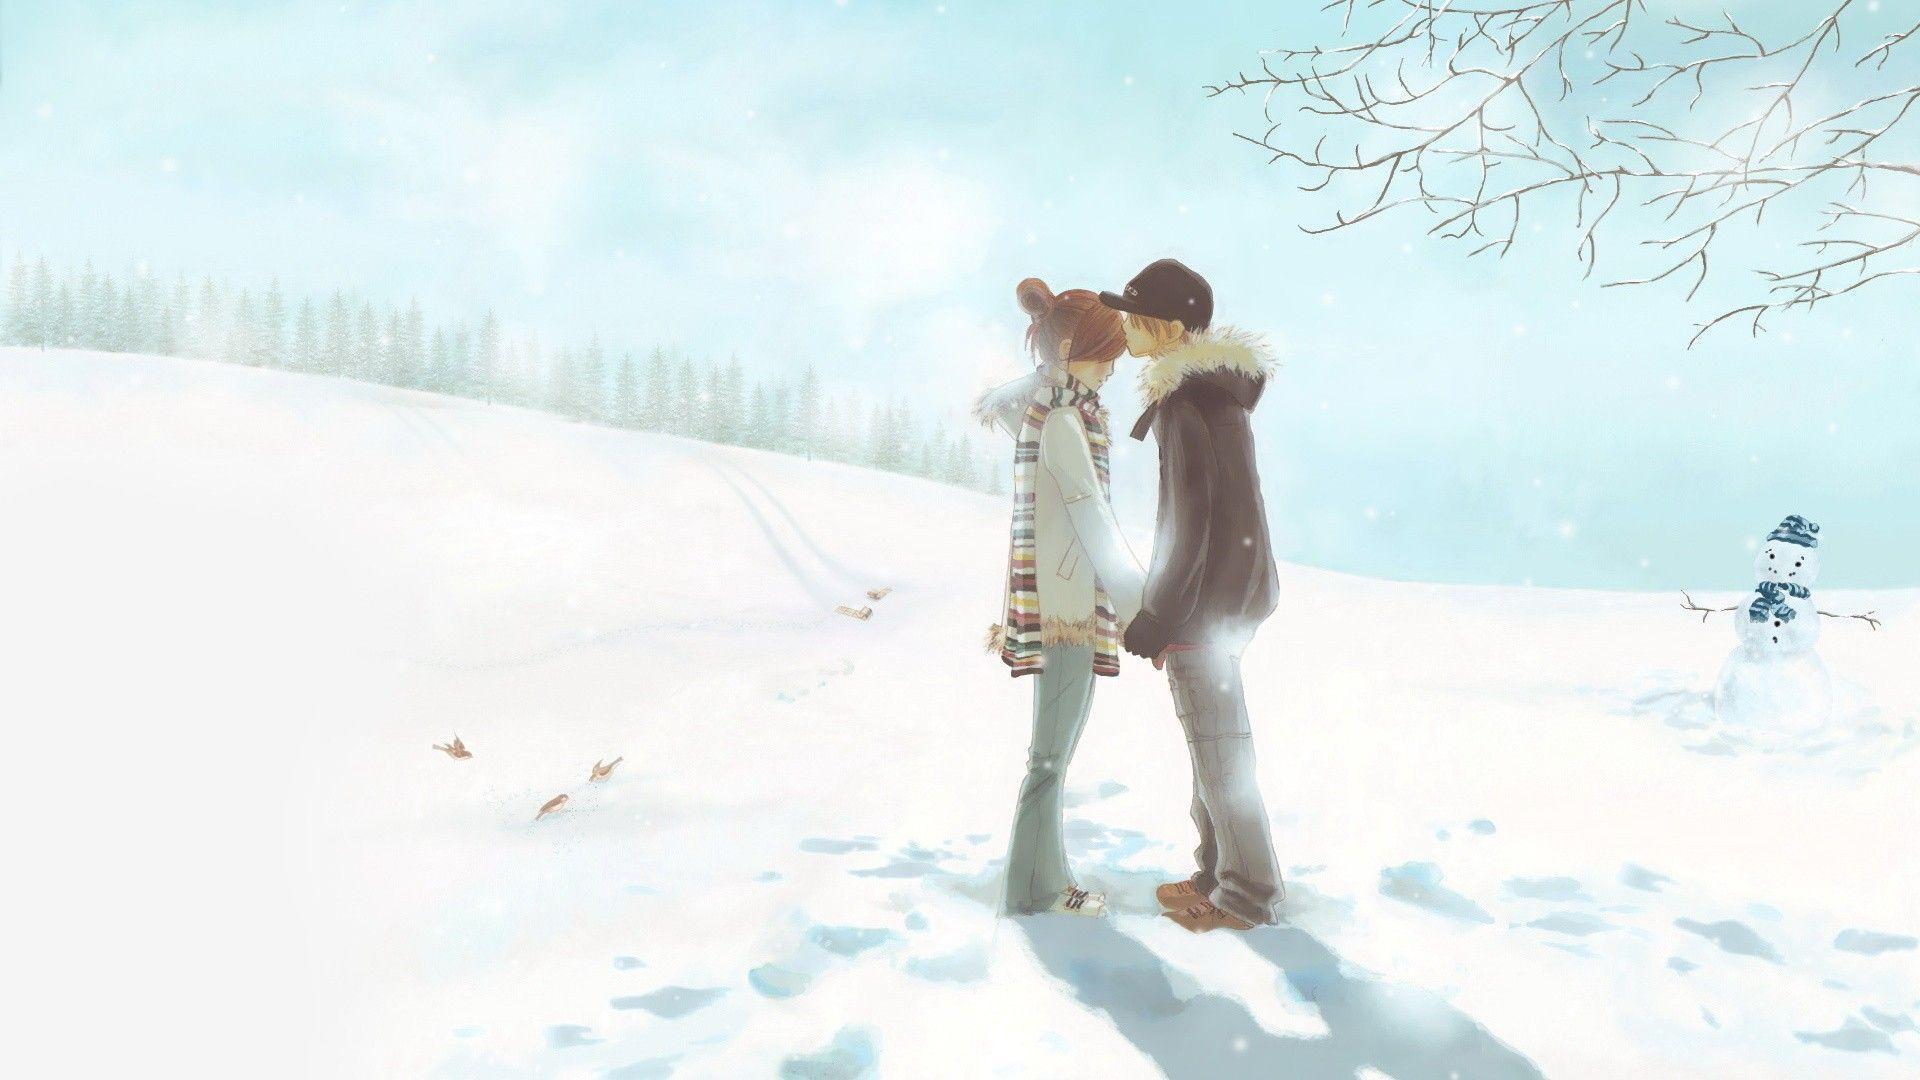 Cute Anime Couple in Winter widescreen wallpaper. Wide